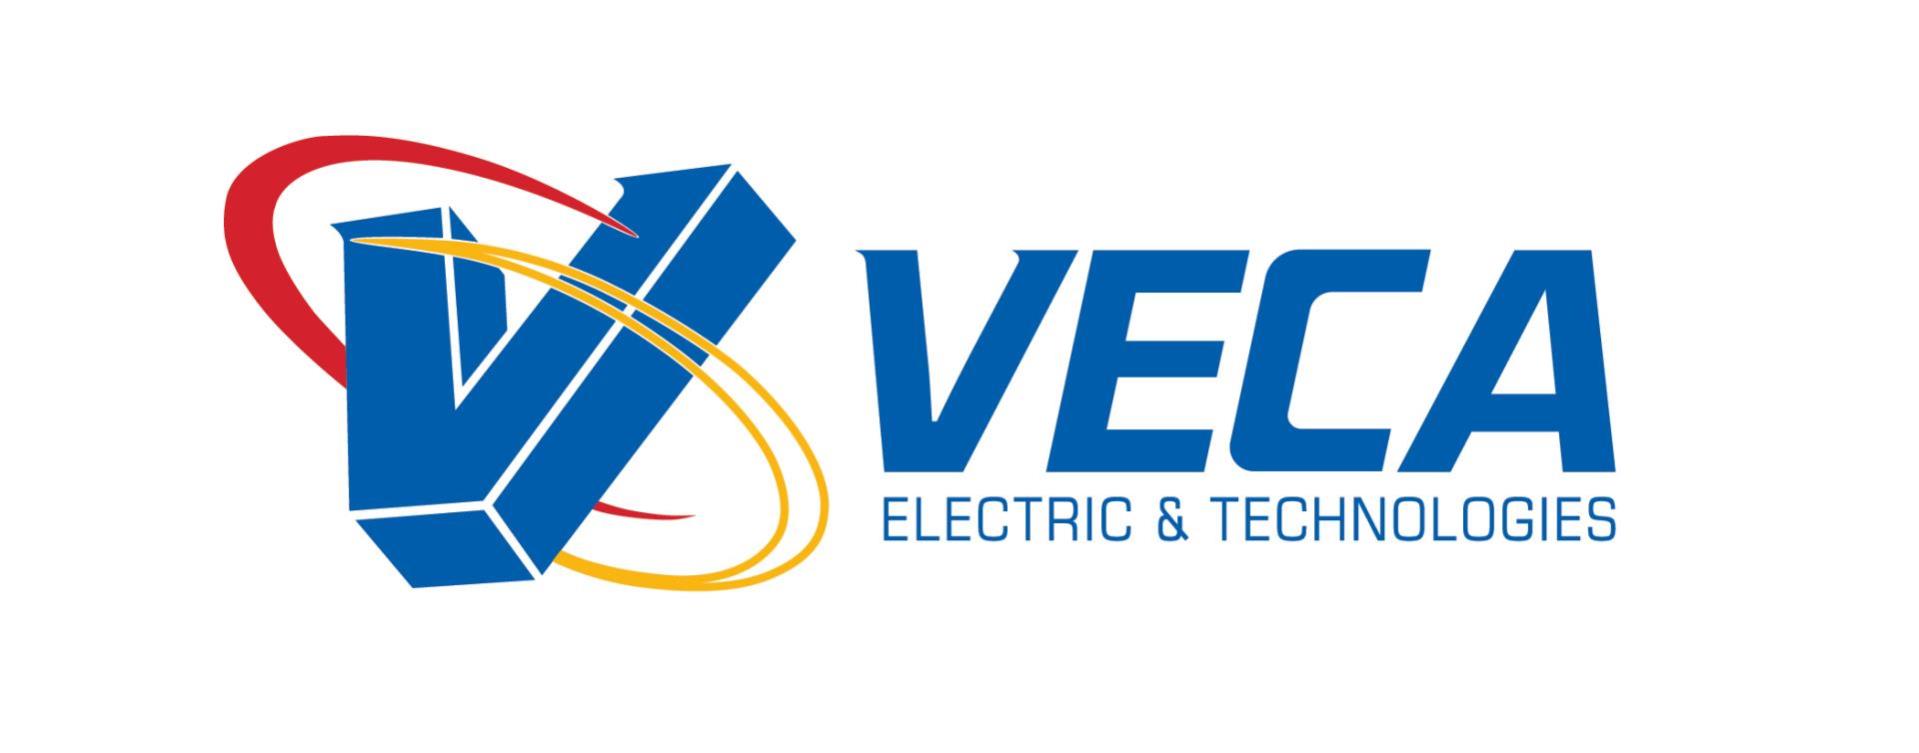 VECA electric & technologies